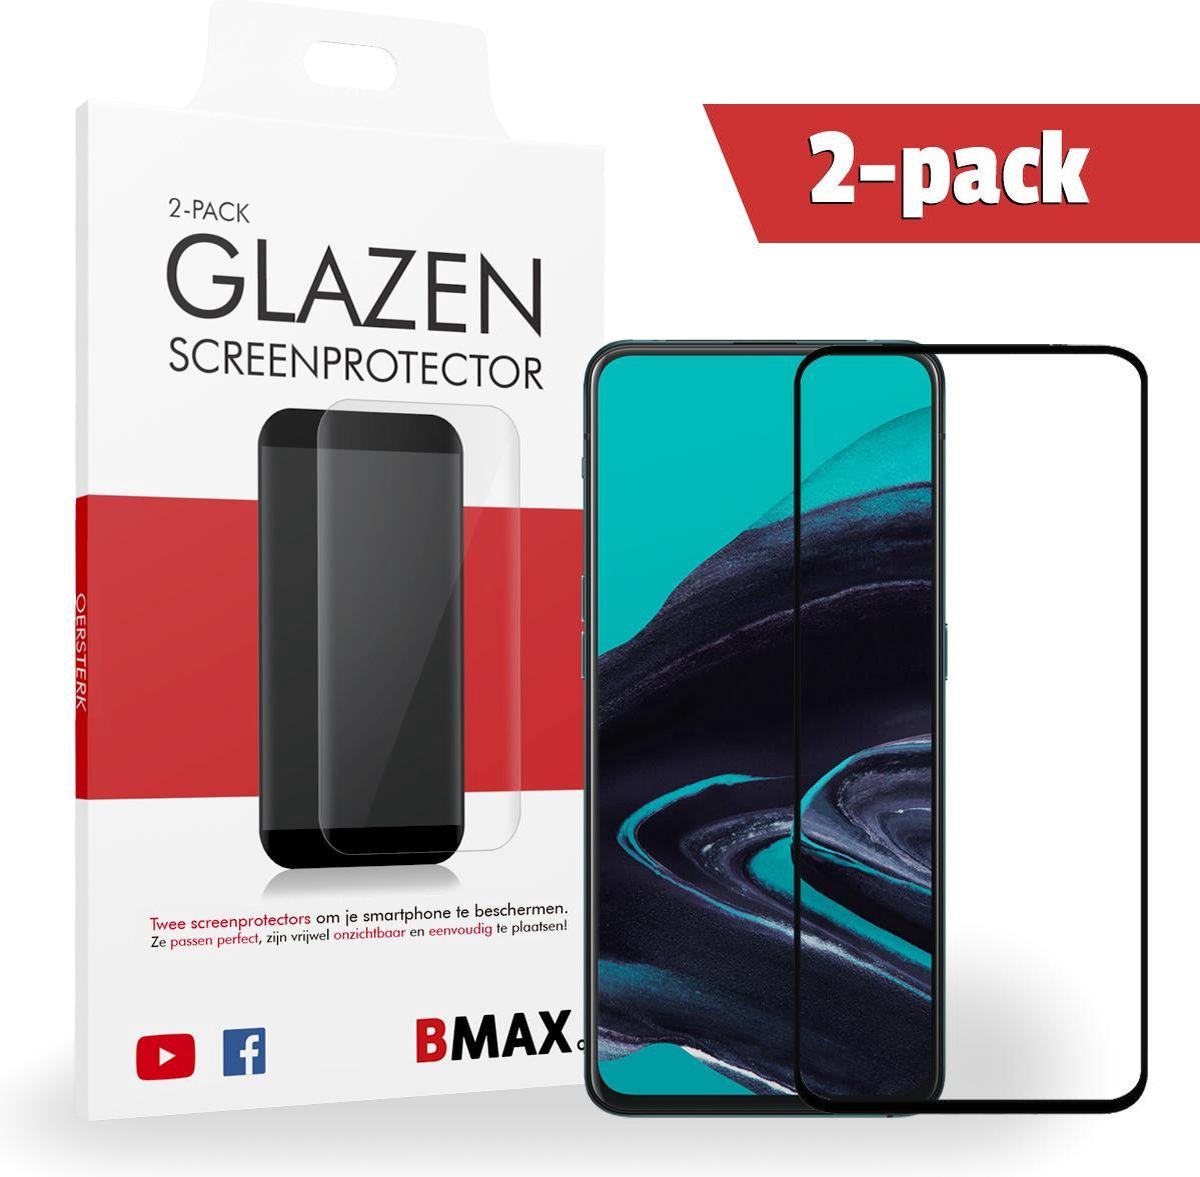 2-pack Bmax Oppo Reno 2 Screenprotector - Glass - Full Cover 2.5d - Black